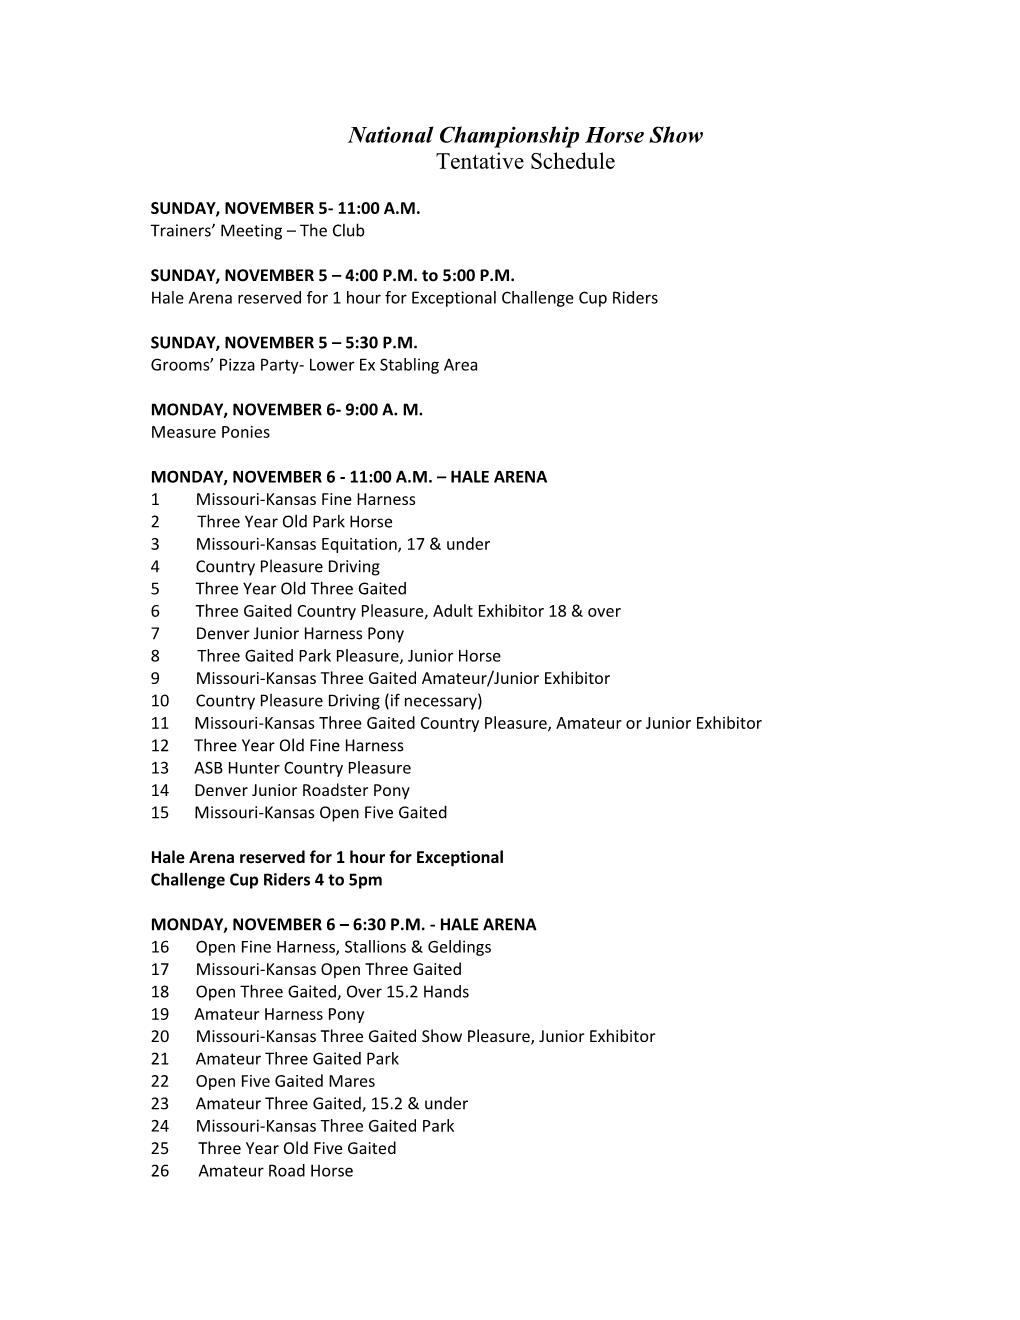 National Championship Horse Show Tentative Schedule